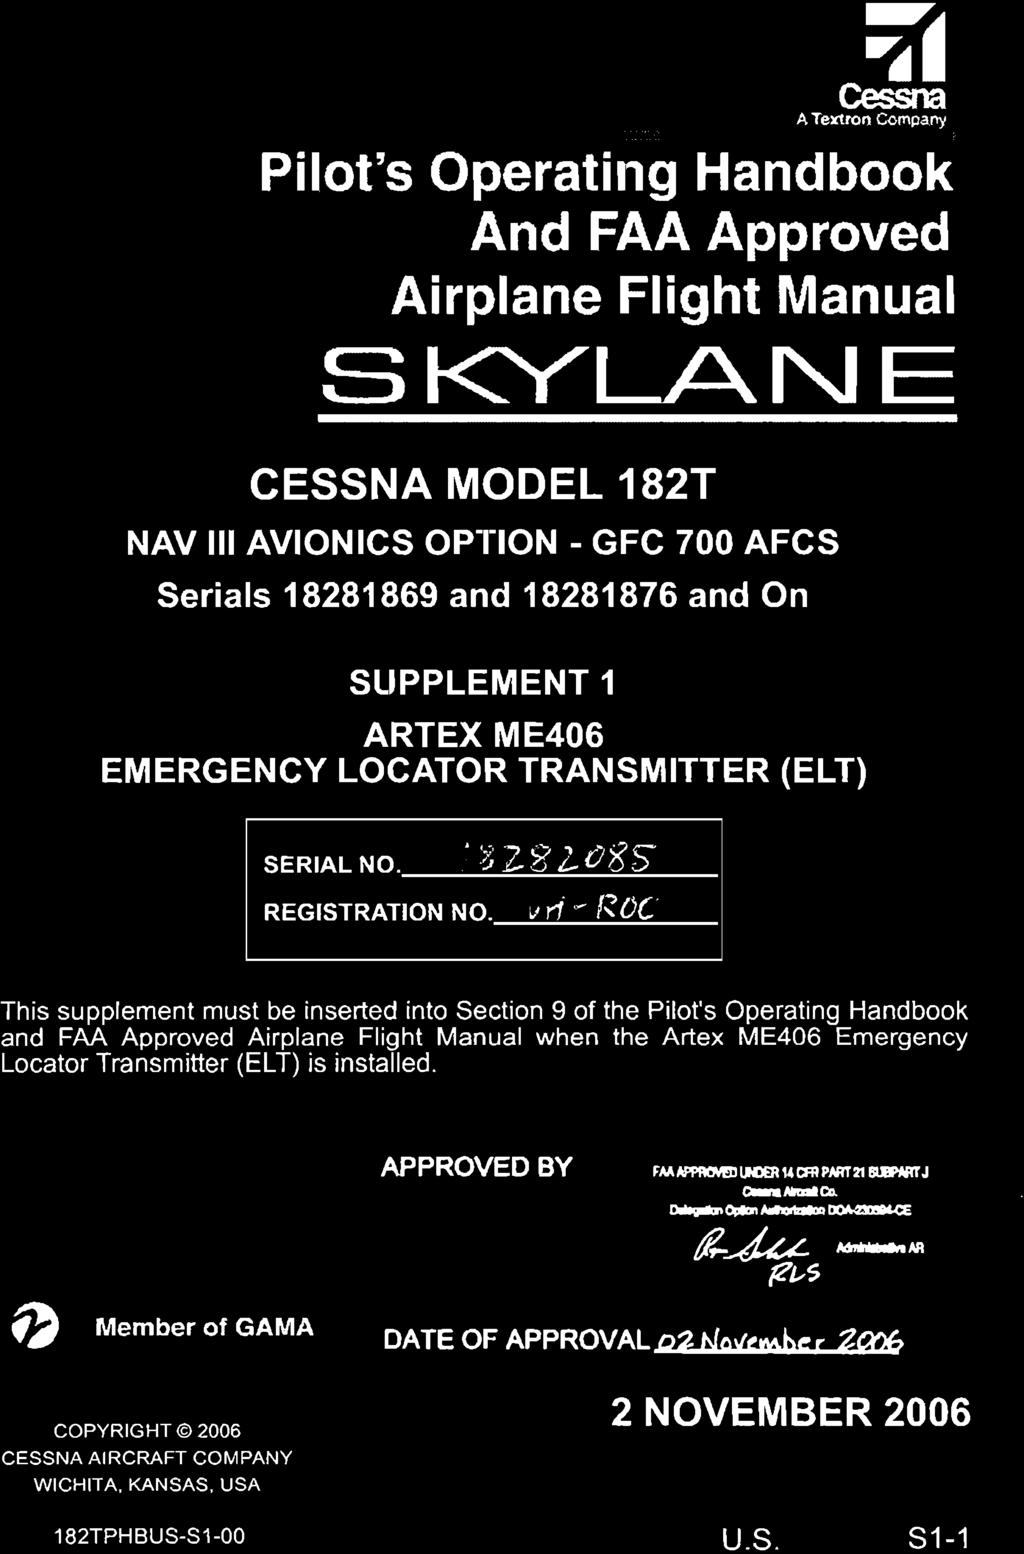 Pilot's Operating Handbook And FAA Approved Airplane Flight Manual SKYLANE CESSNA MODEL 182T NAV III AVIONICS OPTION - Serials 18281869 and 18281876 and On SUPPLEMENT 1 ARTEX ME406 EMERGENCY LOCATOR